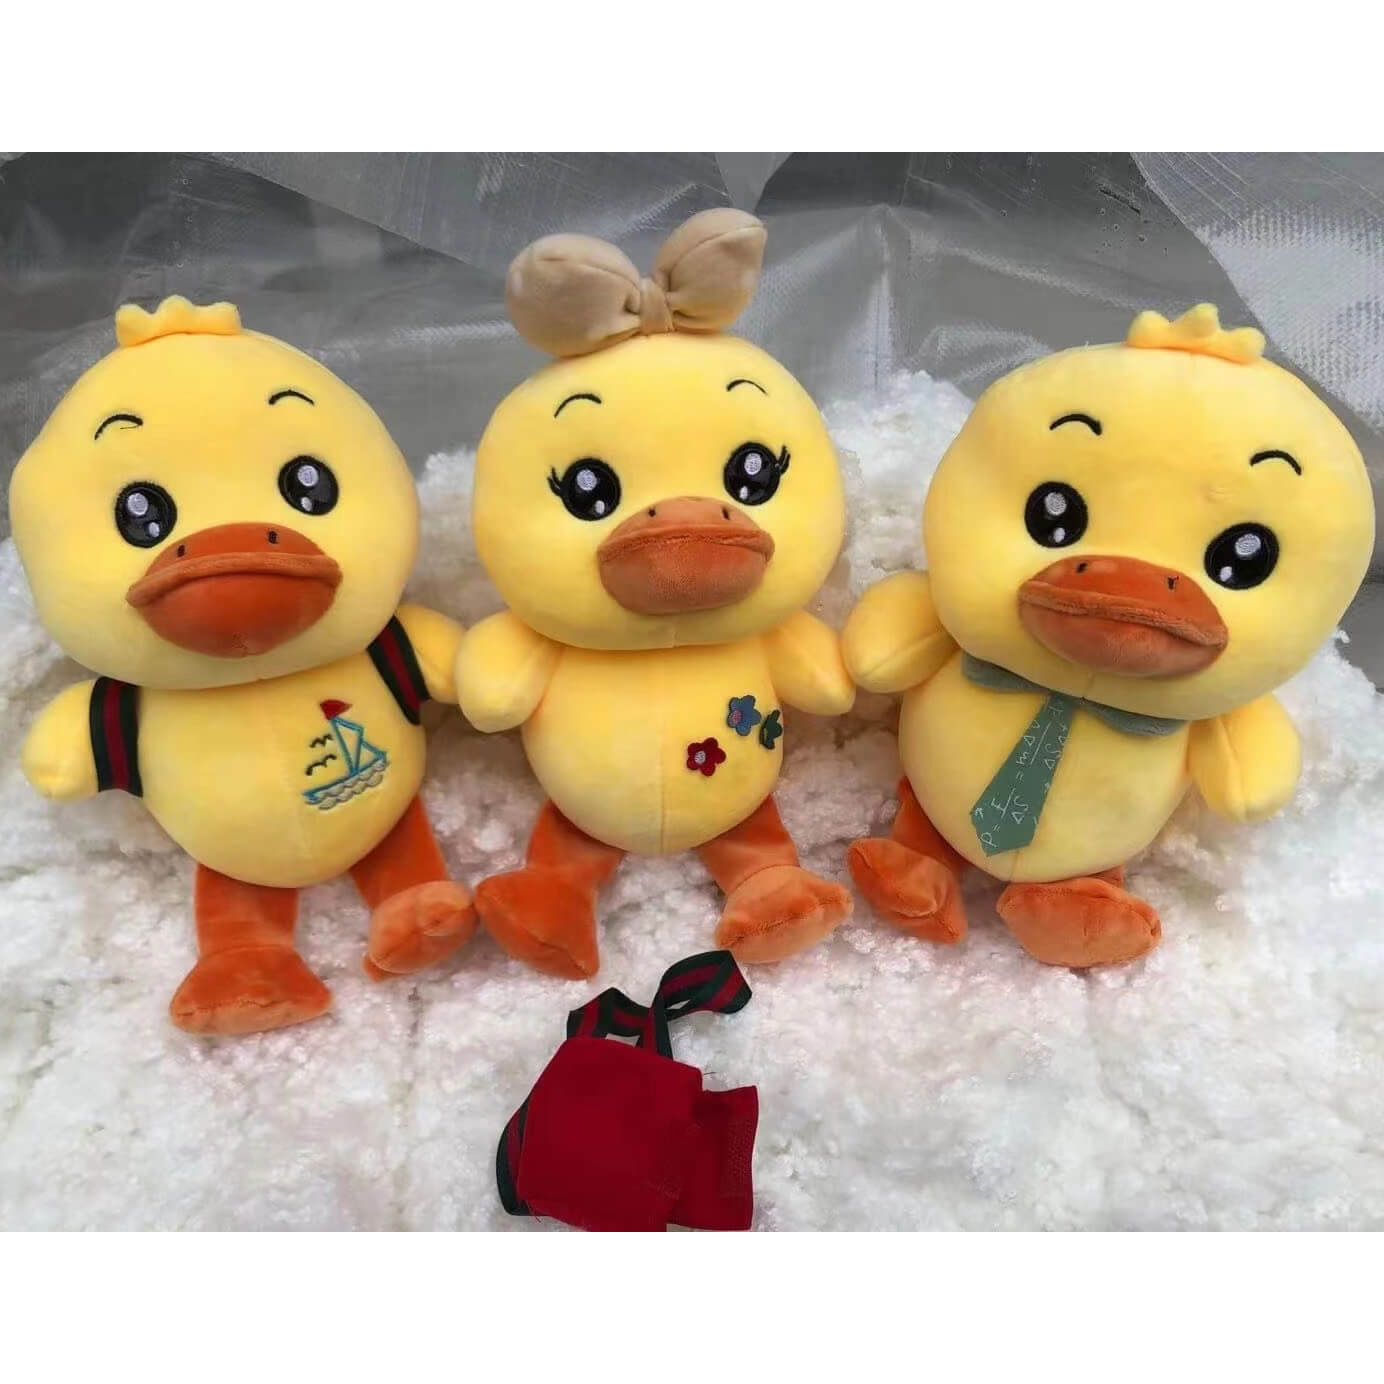 duck-plush-toys